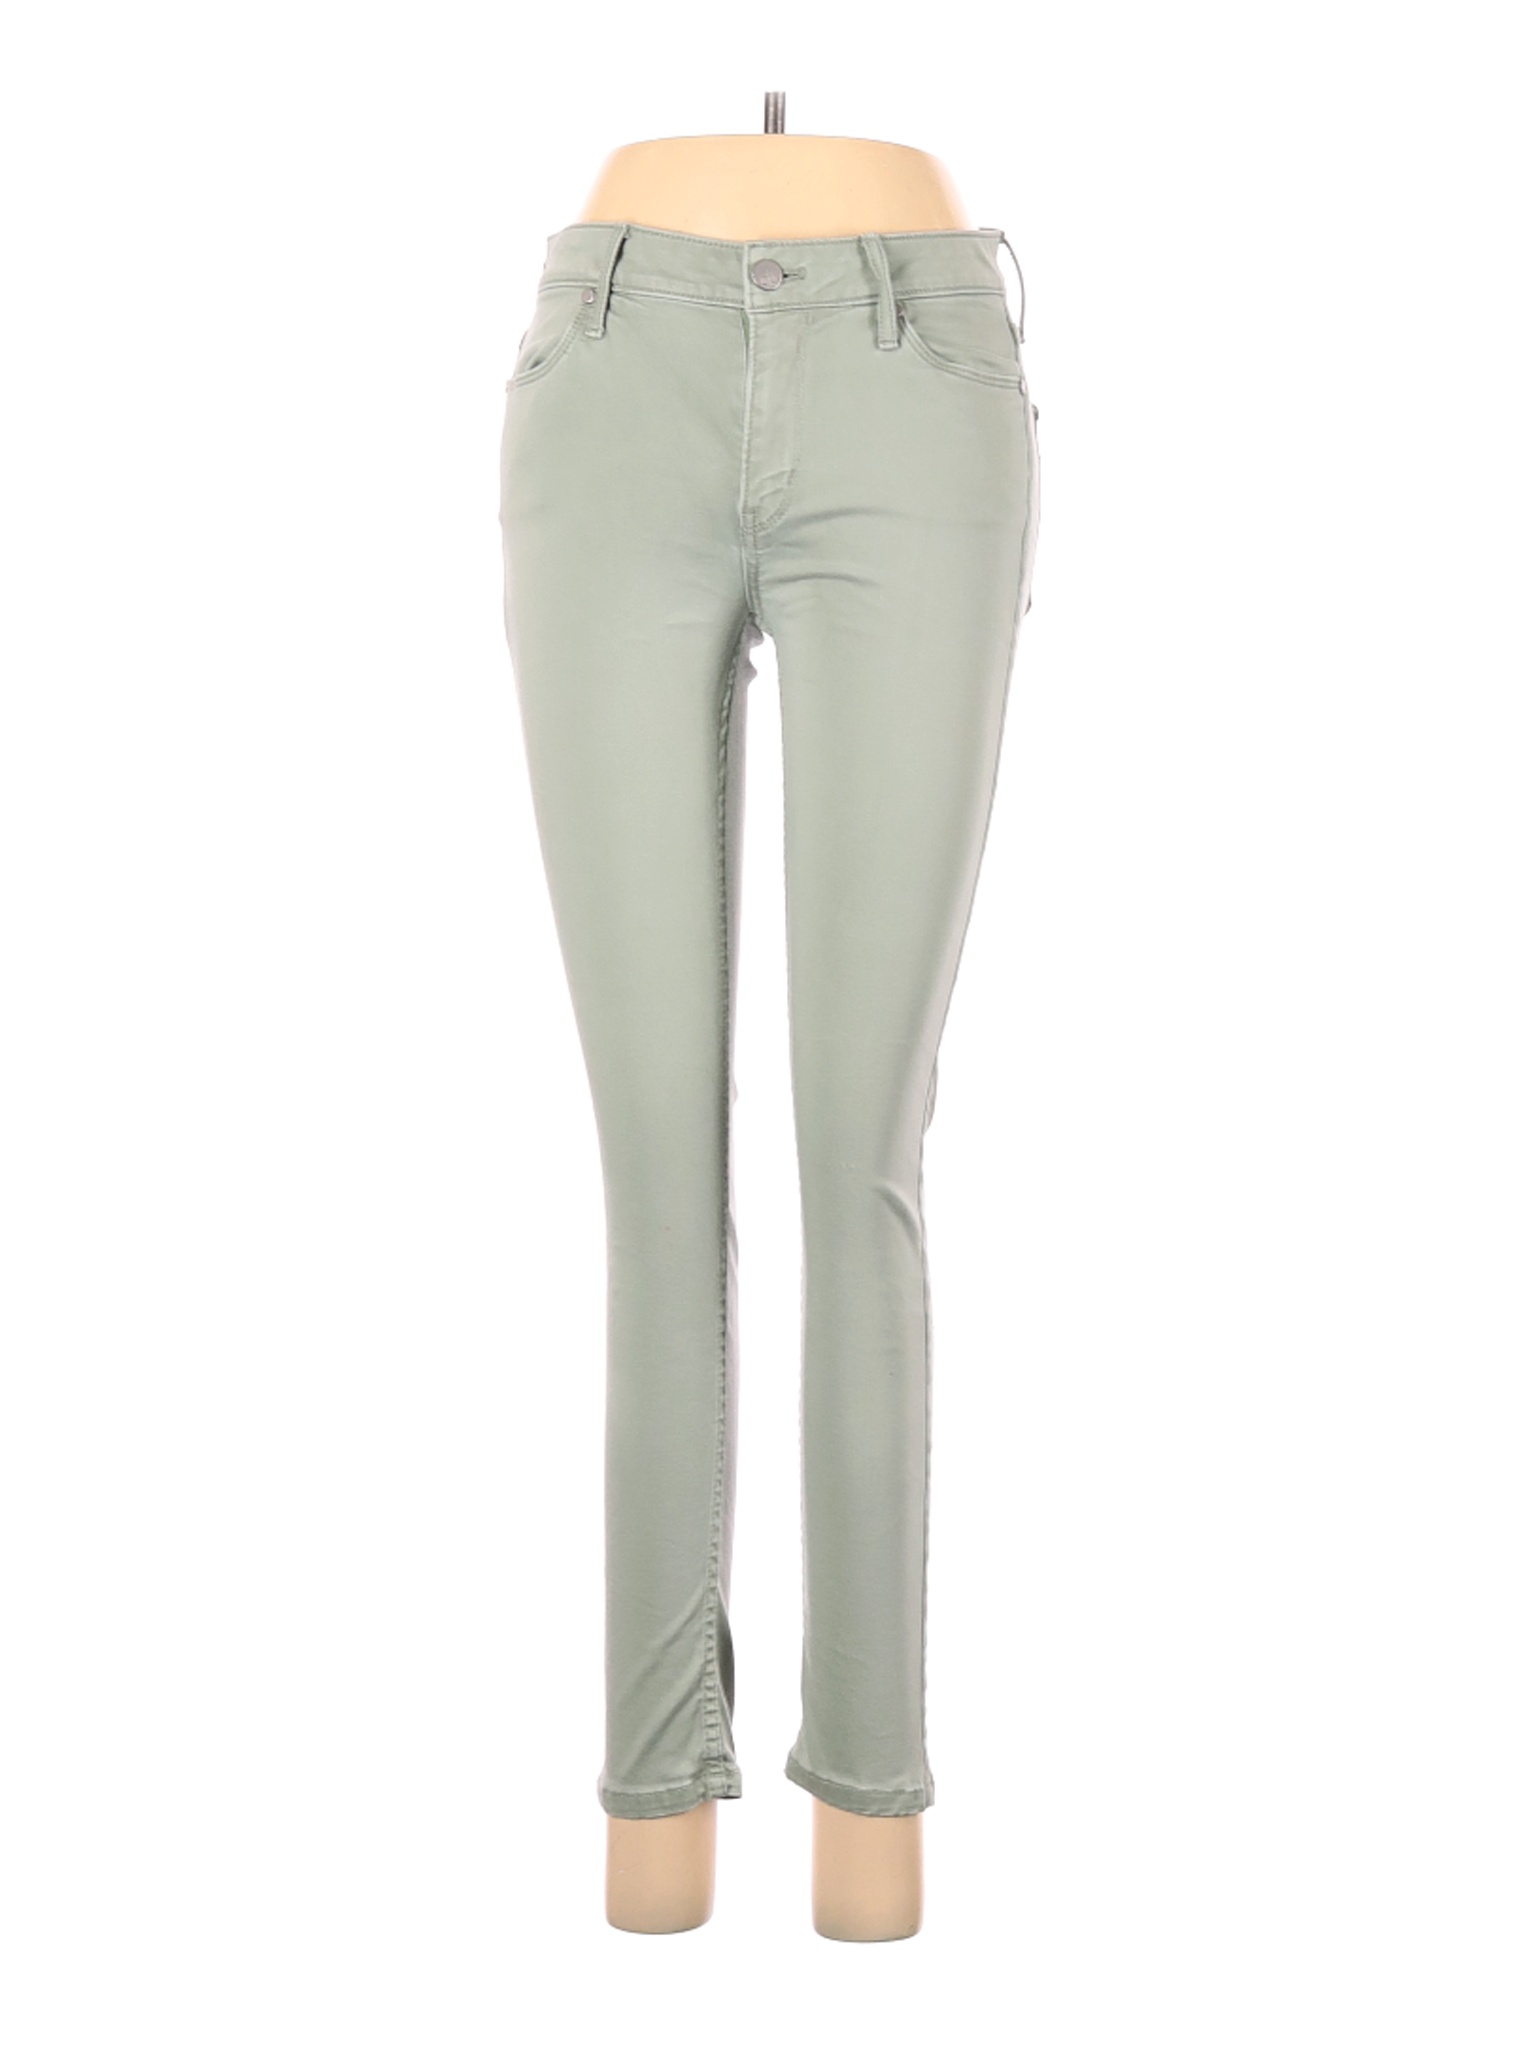 Calvin Klein Women Green Jeans 6 | eBay